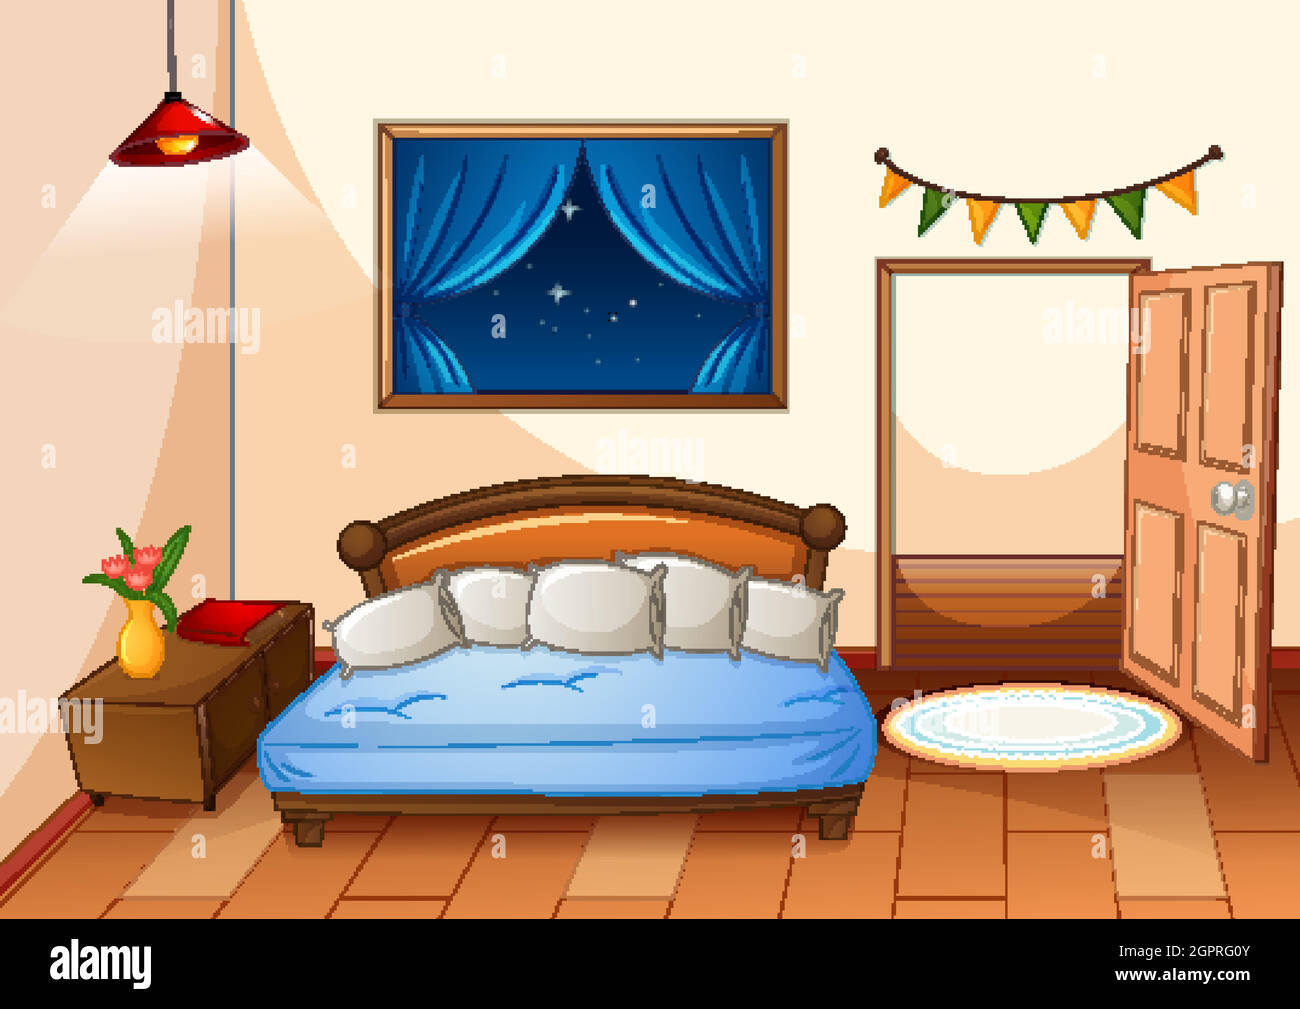 Bedroom cartoon style at night scene Stock Vector